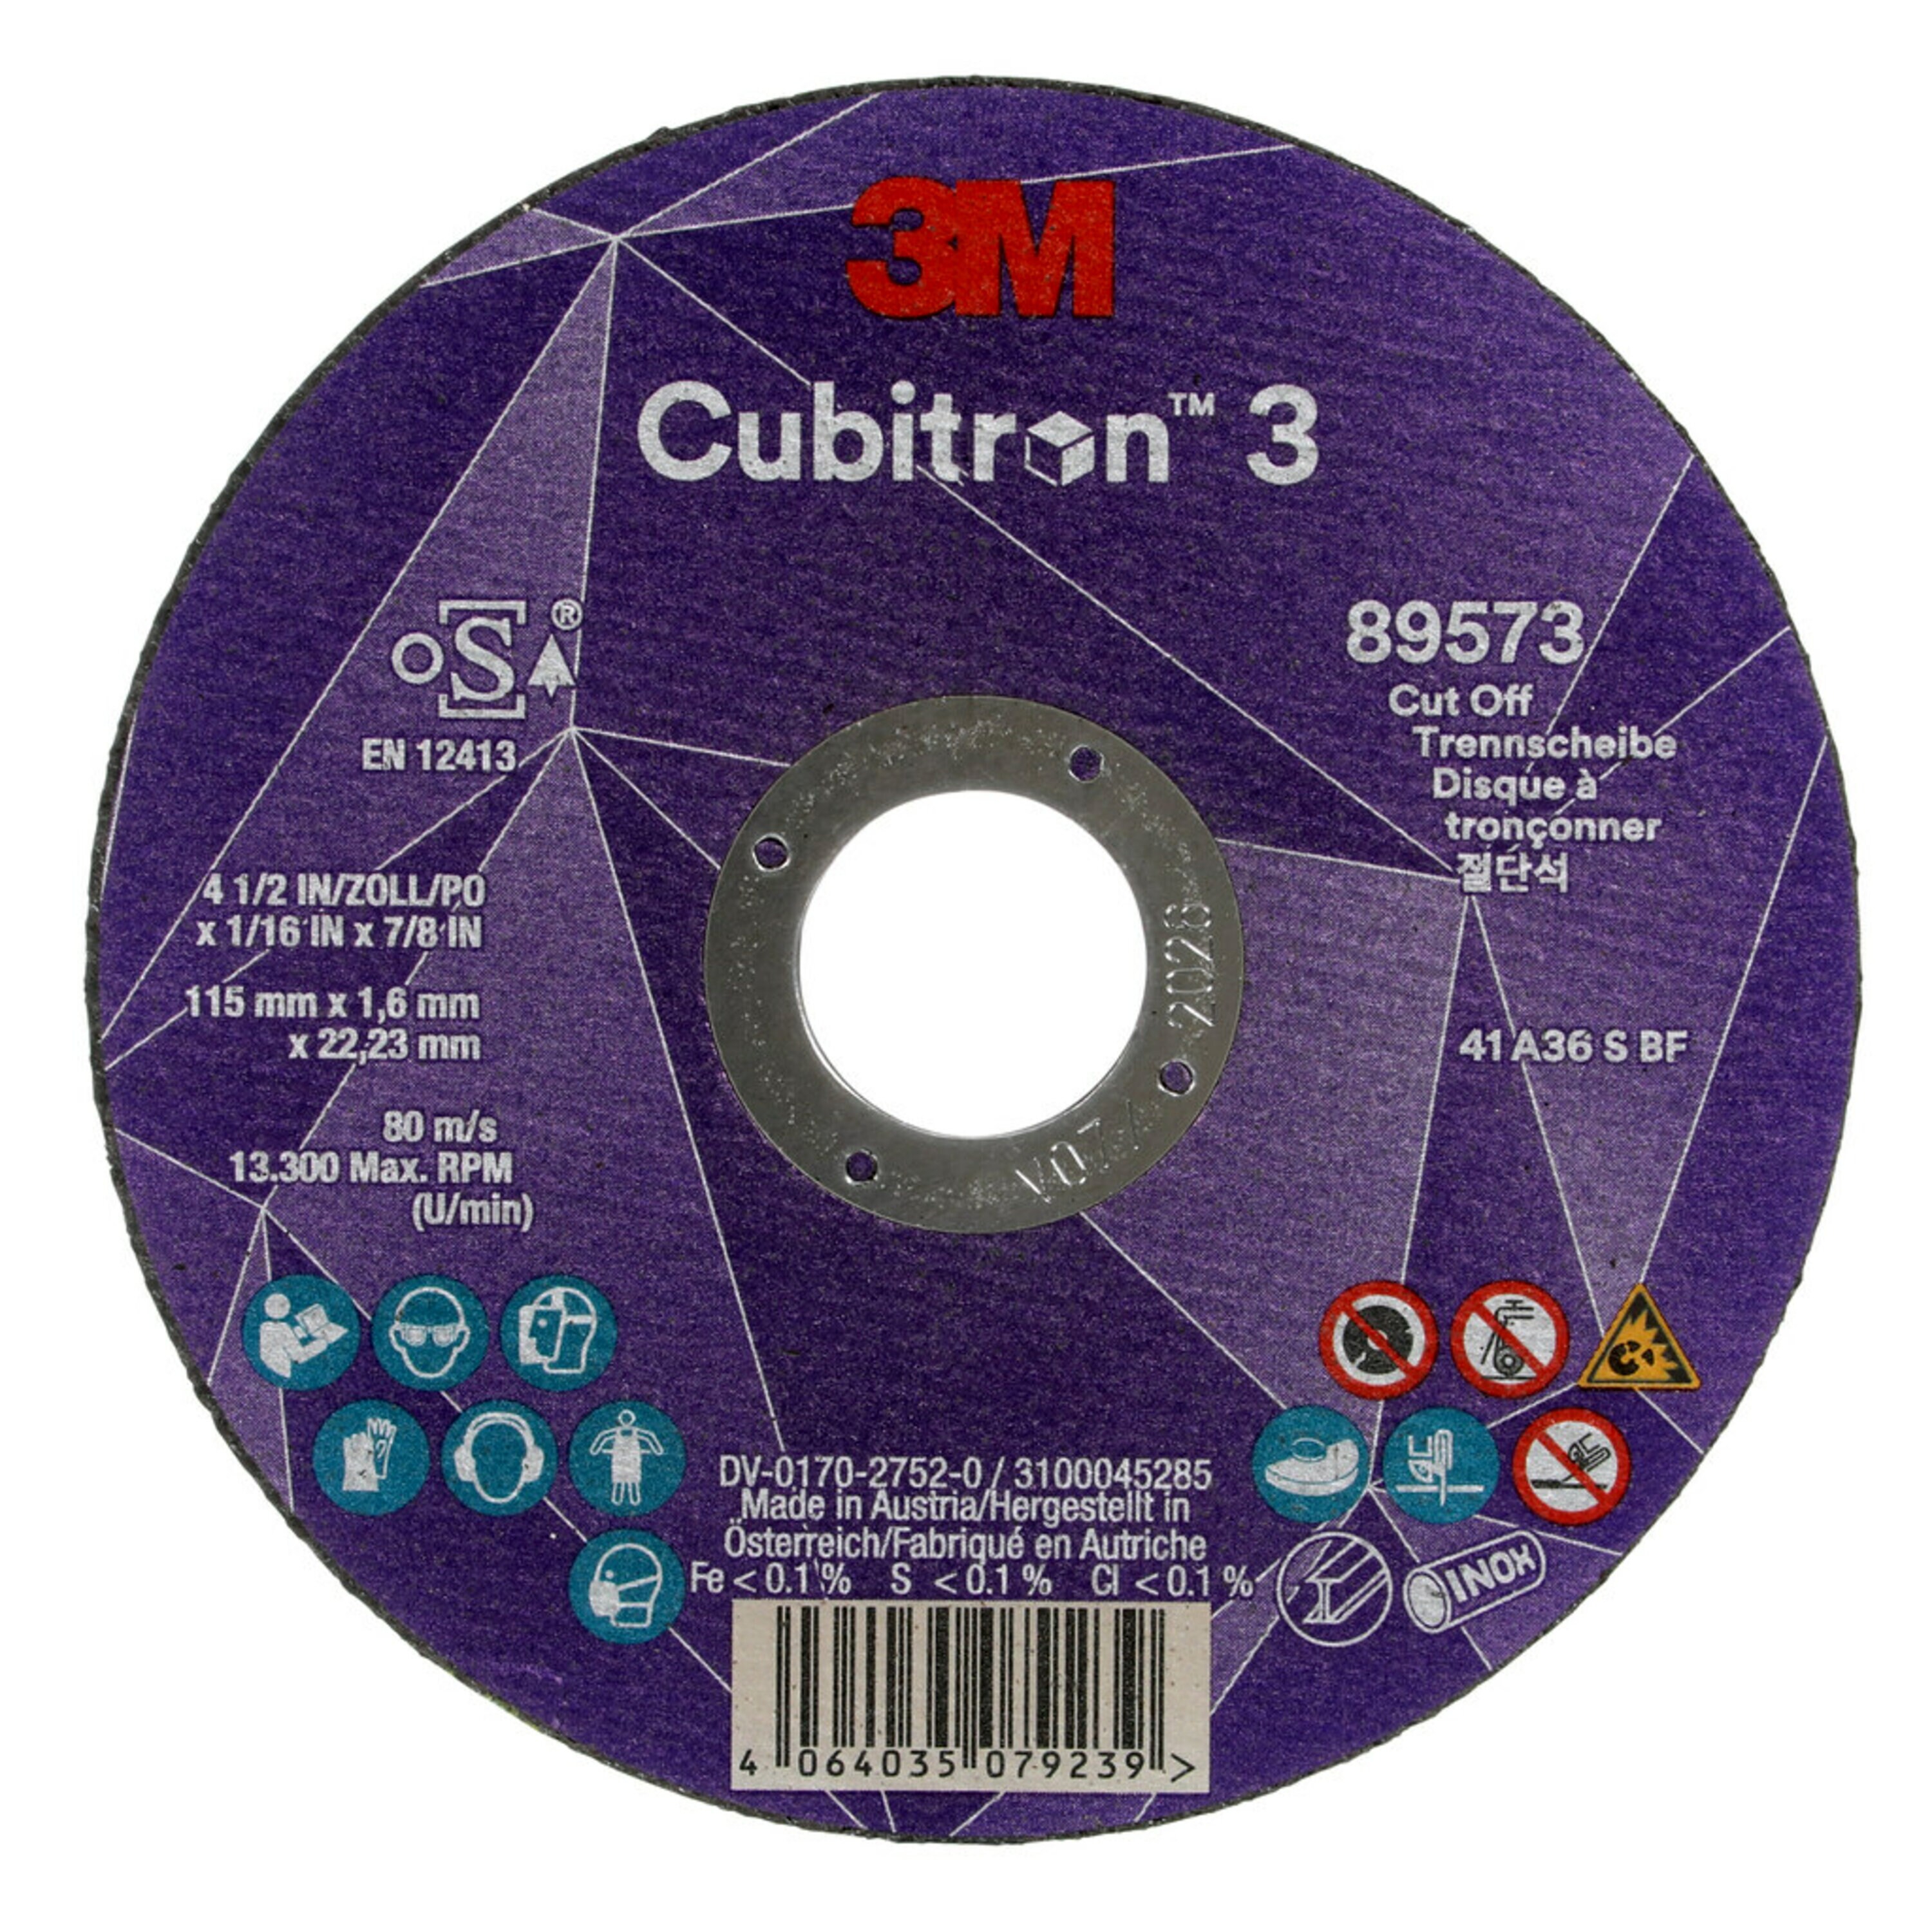 3M Cubitron 3 cut-off wheel, 115 mm, 1.6 mm, 22.23 mm, 36+, type 41 #89573